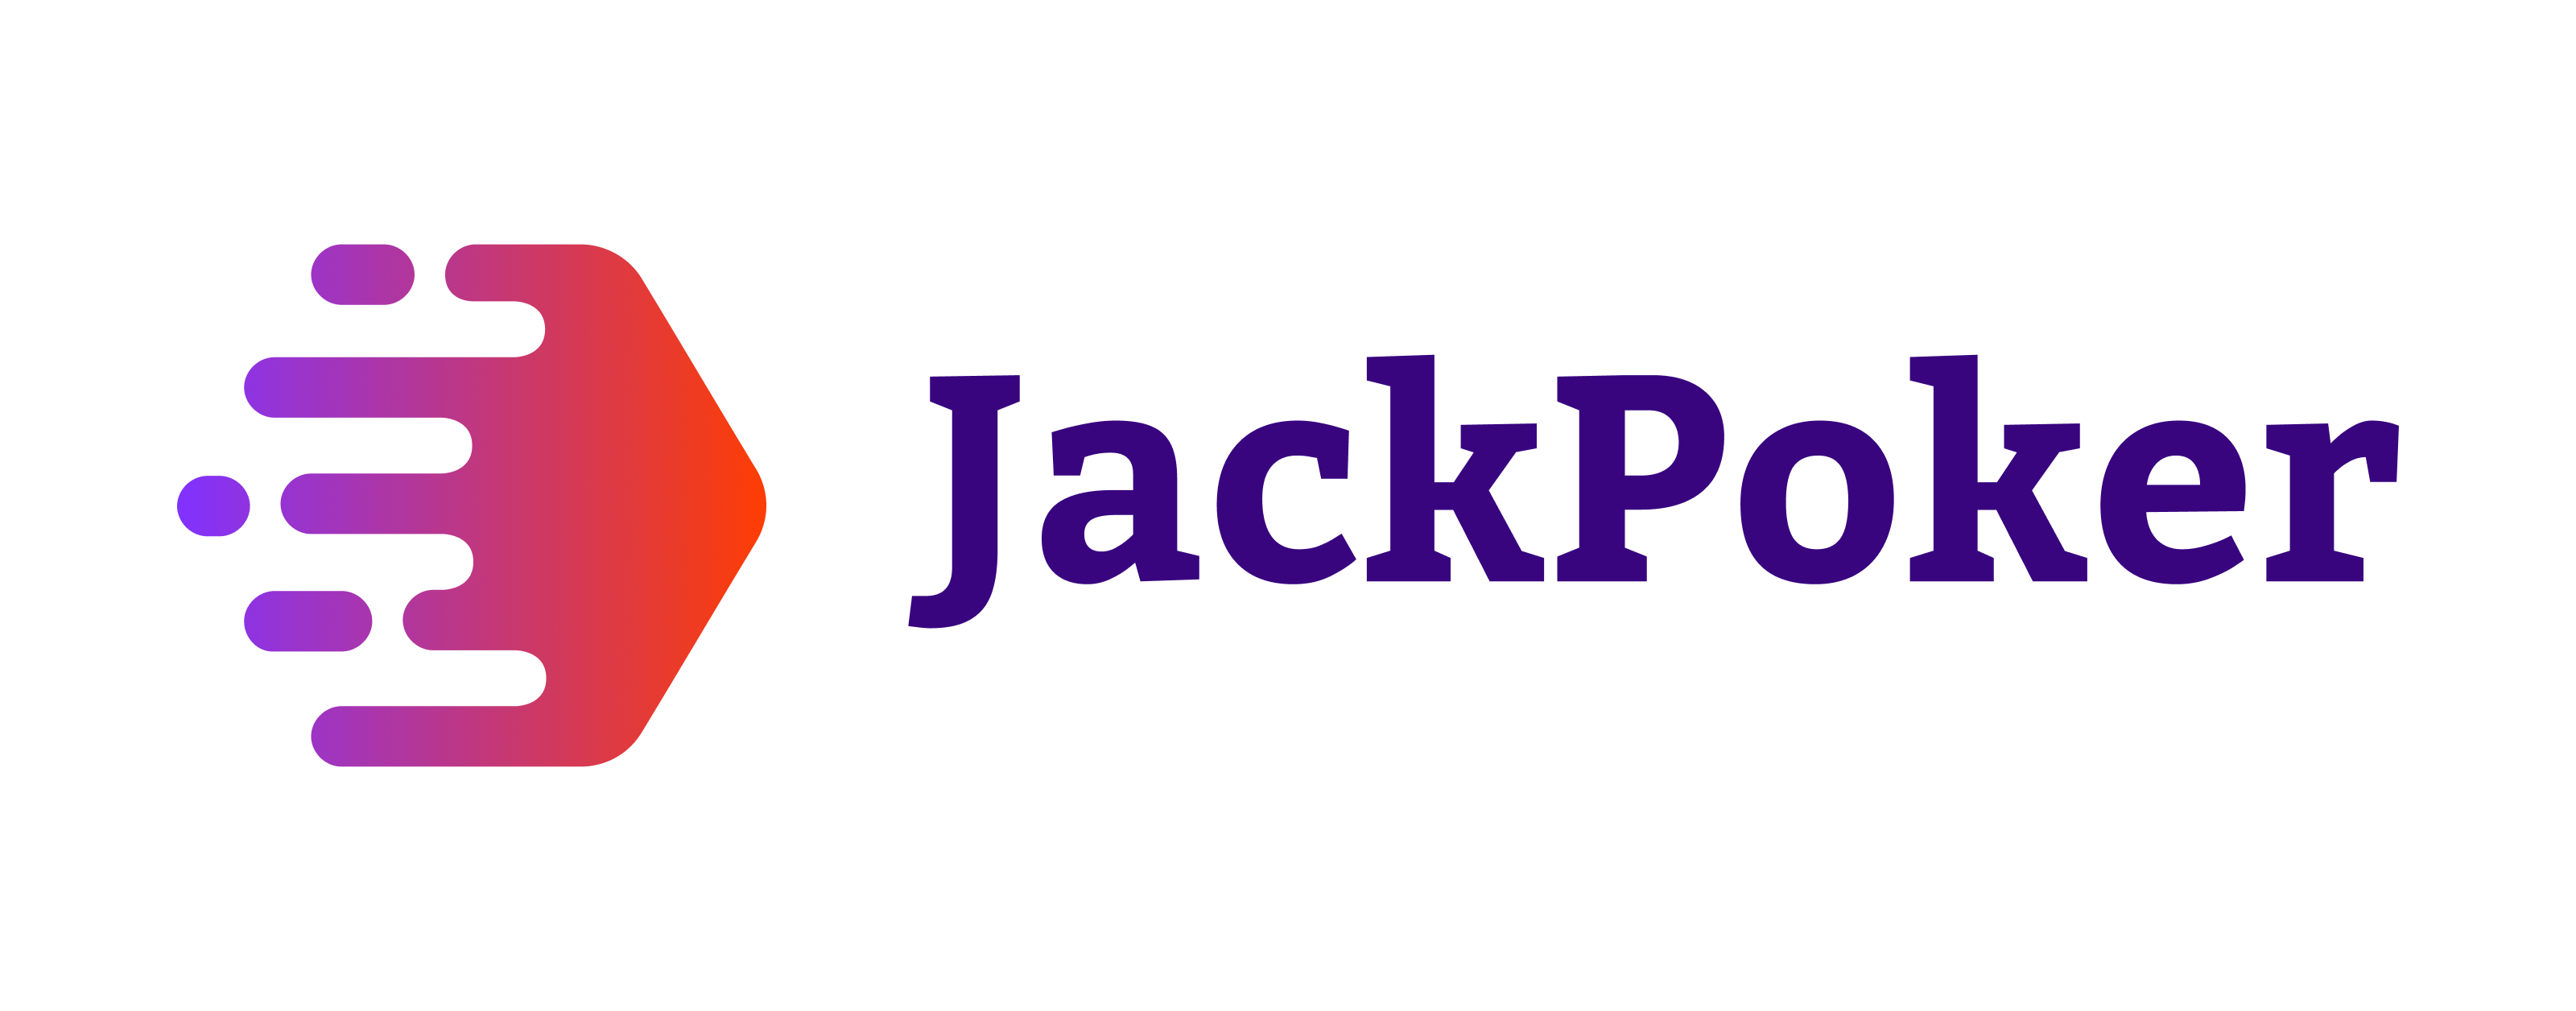 jackpoker bonus code